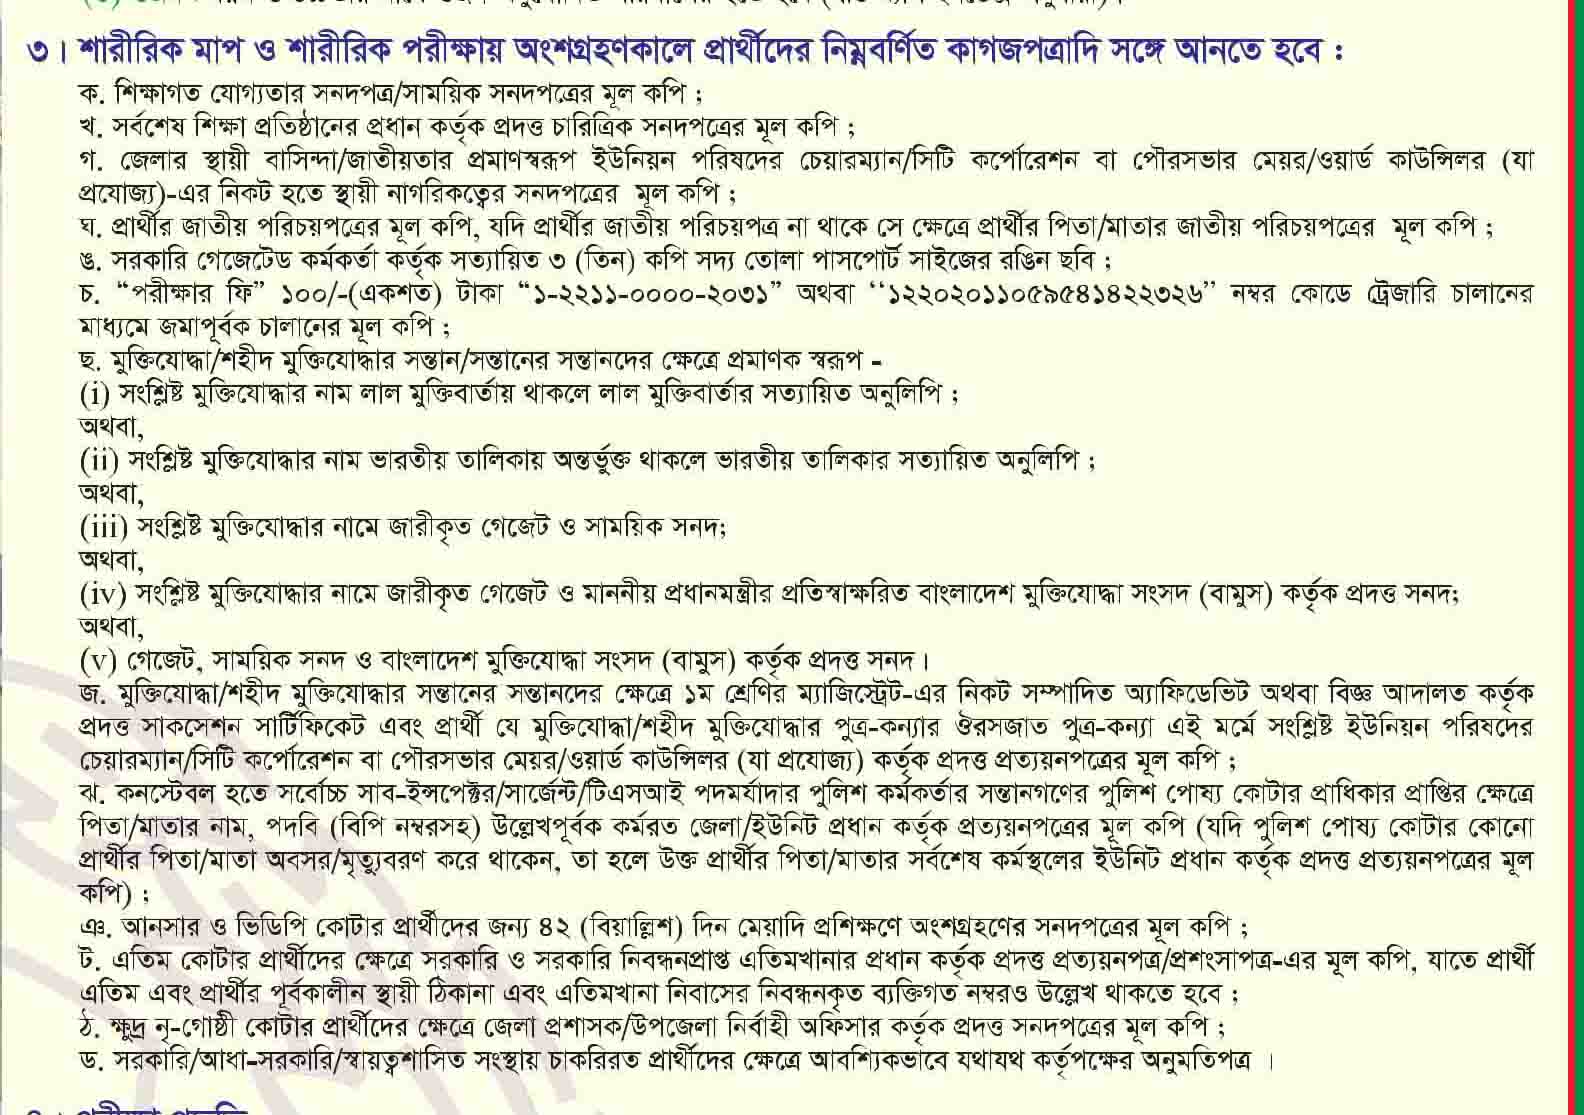 Bangladesh Police Constable Recruitment Exam Important Documents